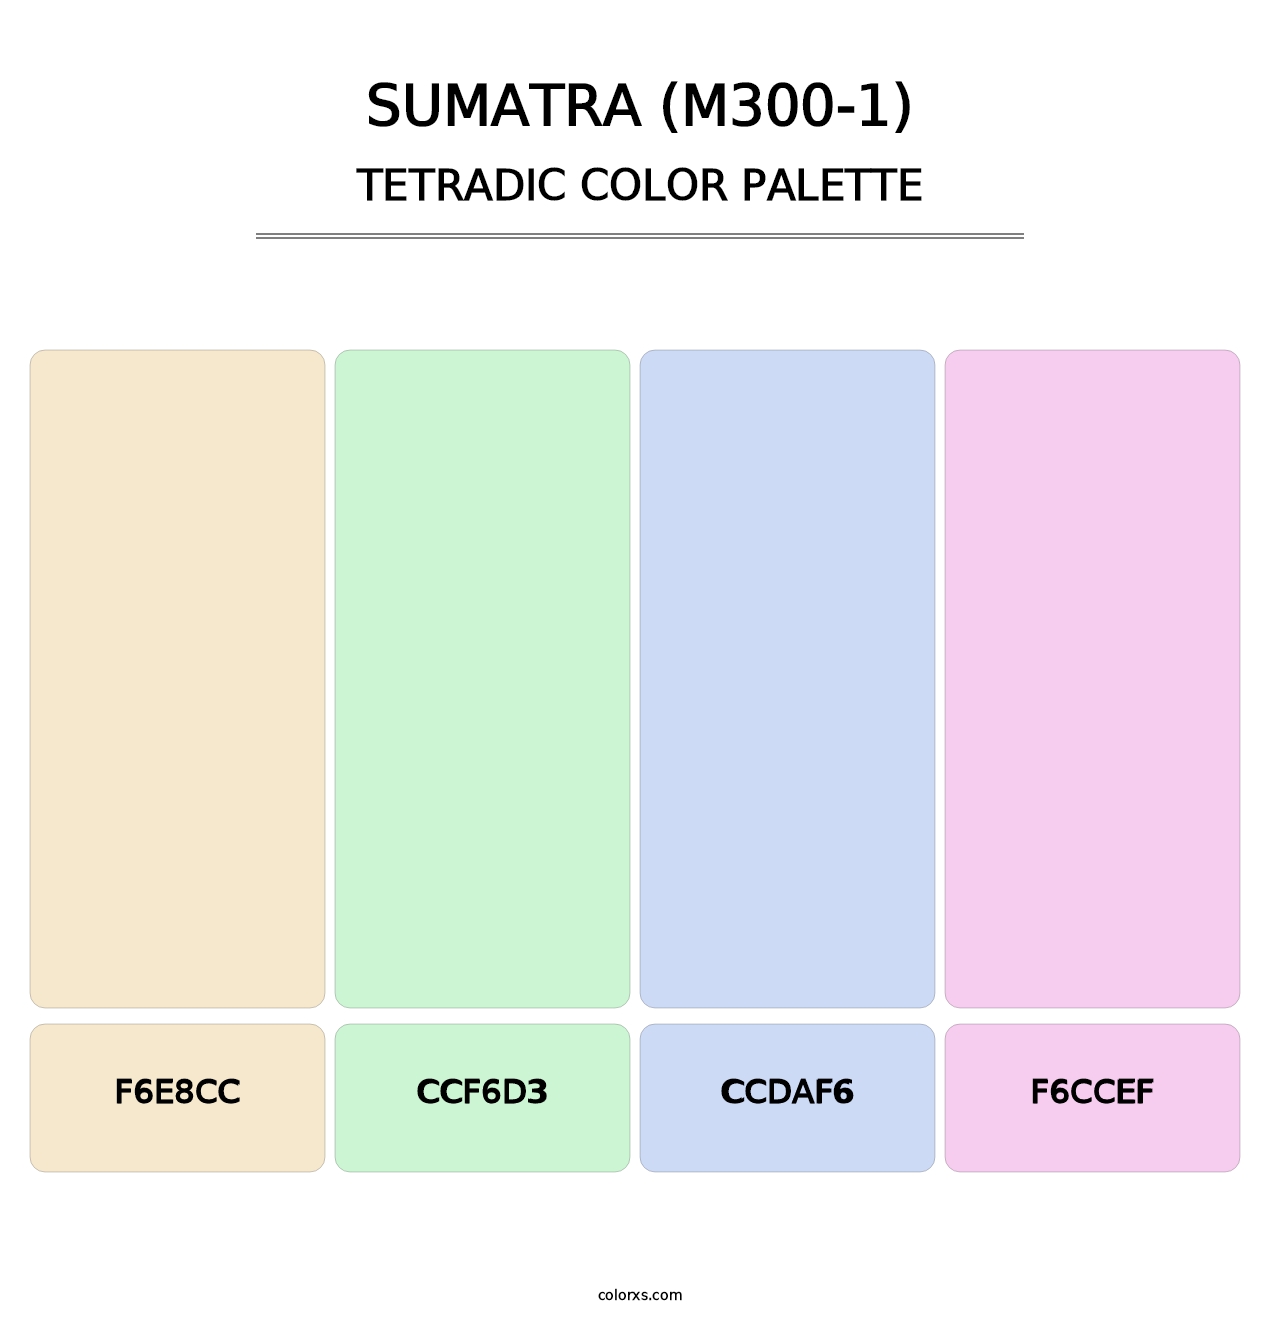 Sumatra (M300-1) - Tetradic Color Palette